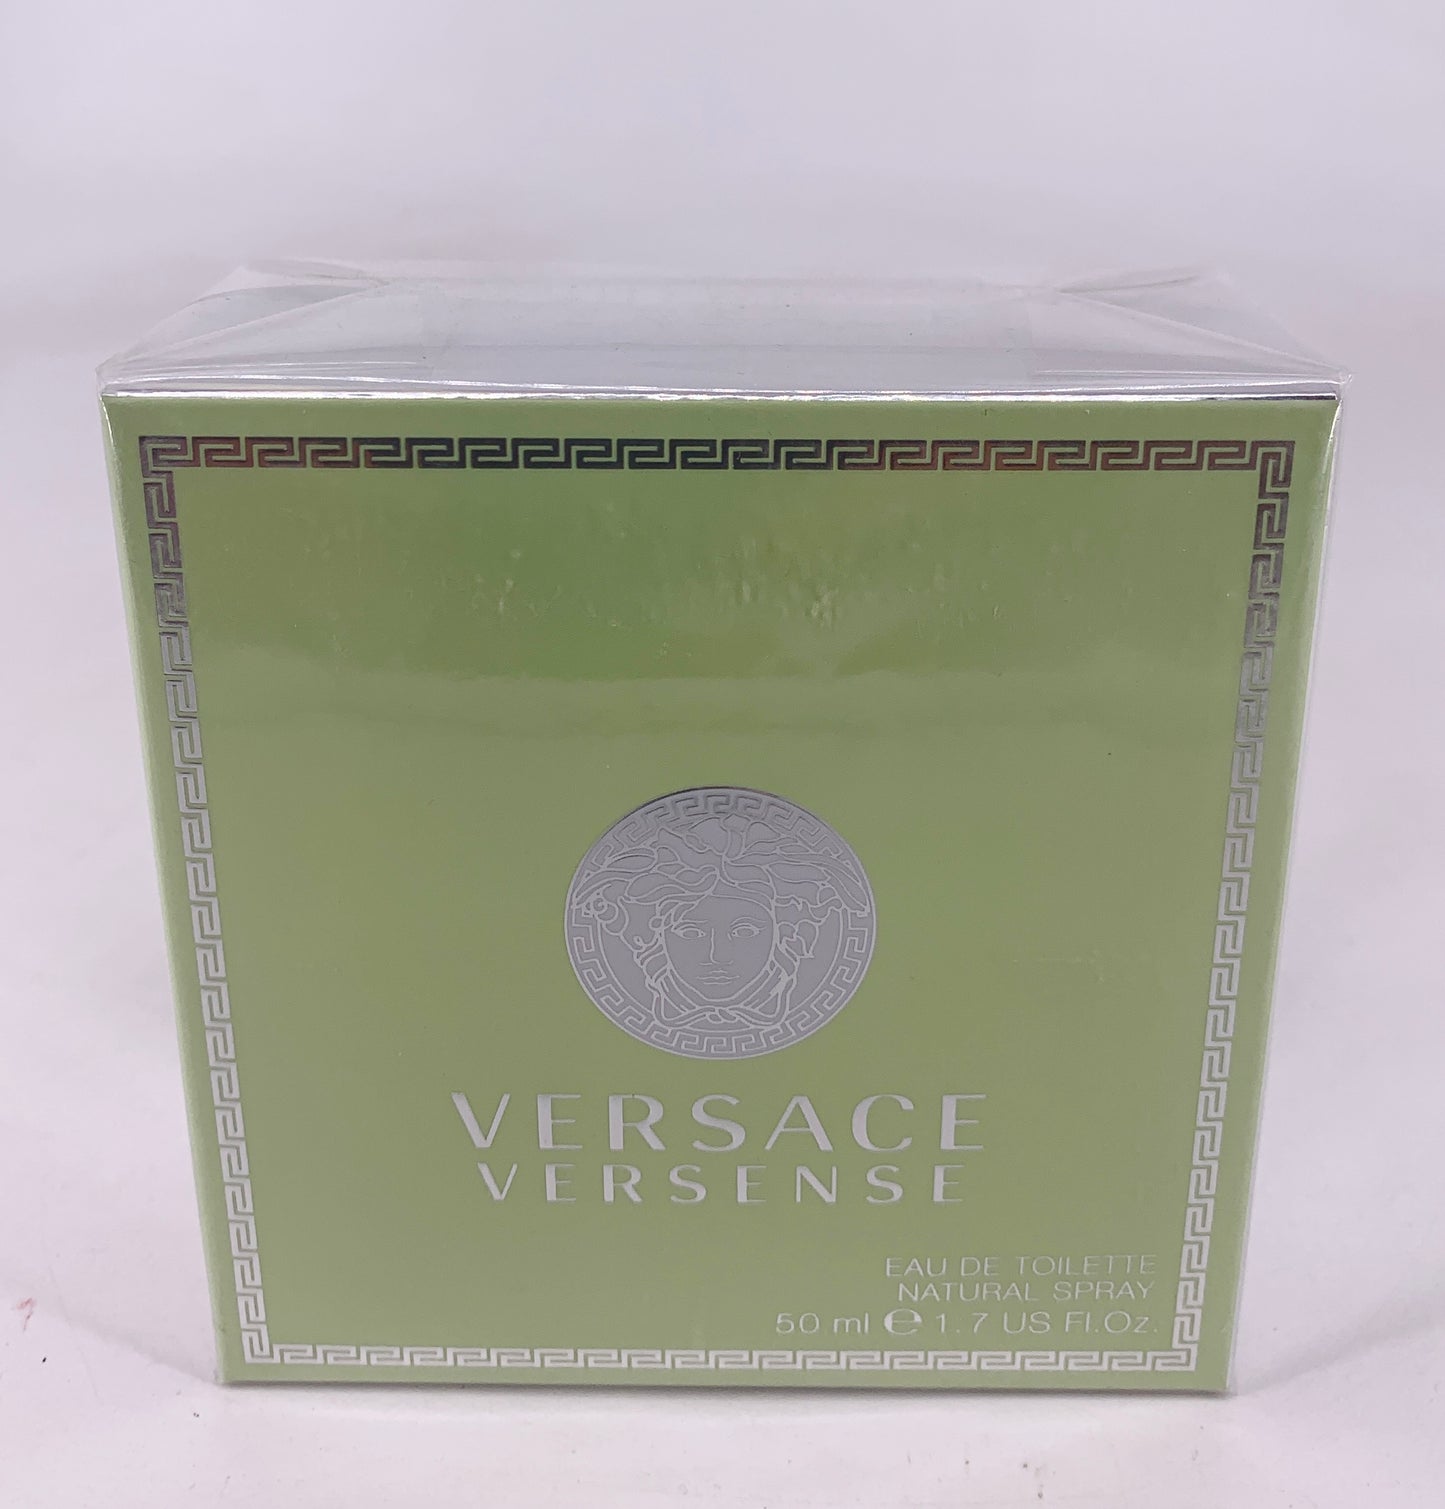 Versace Versense 50ml EDT